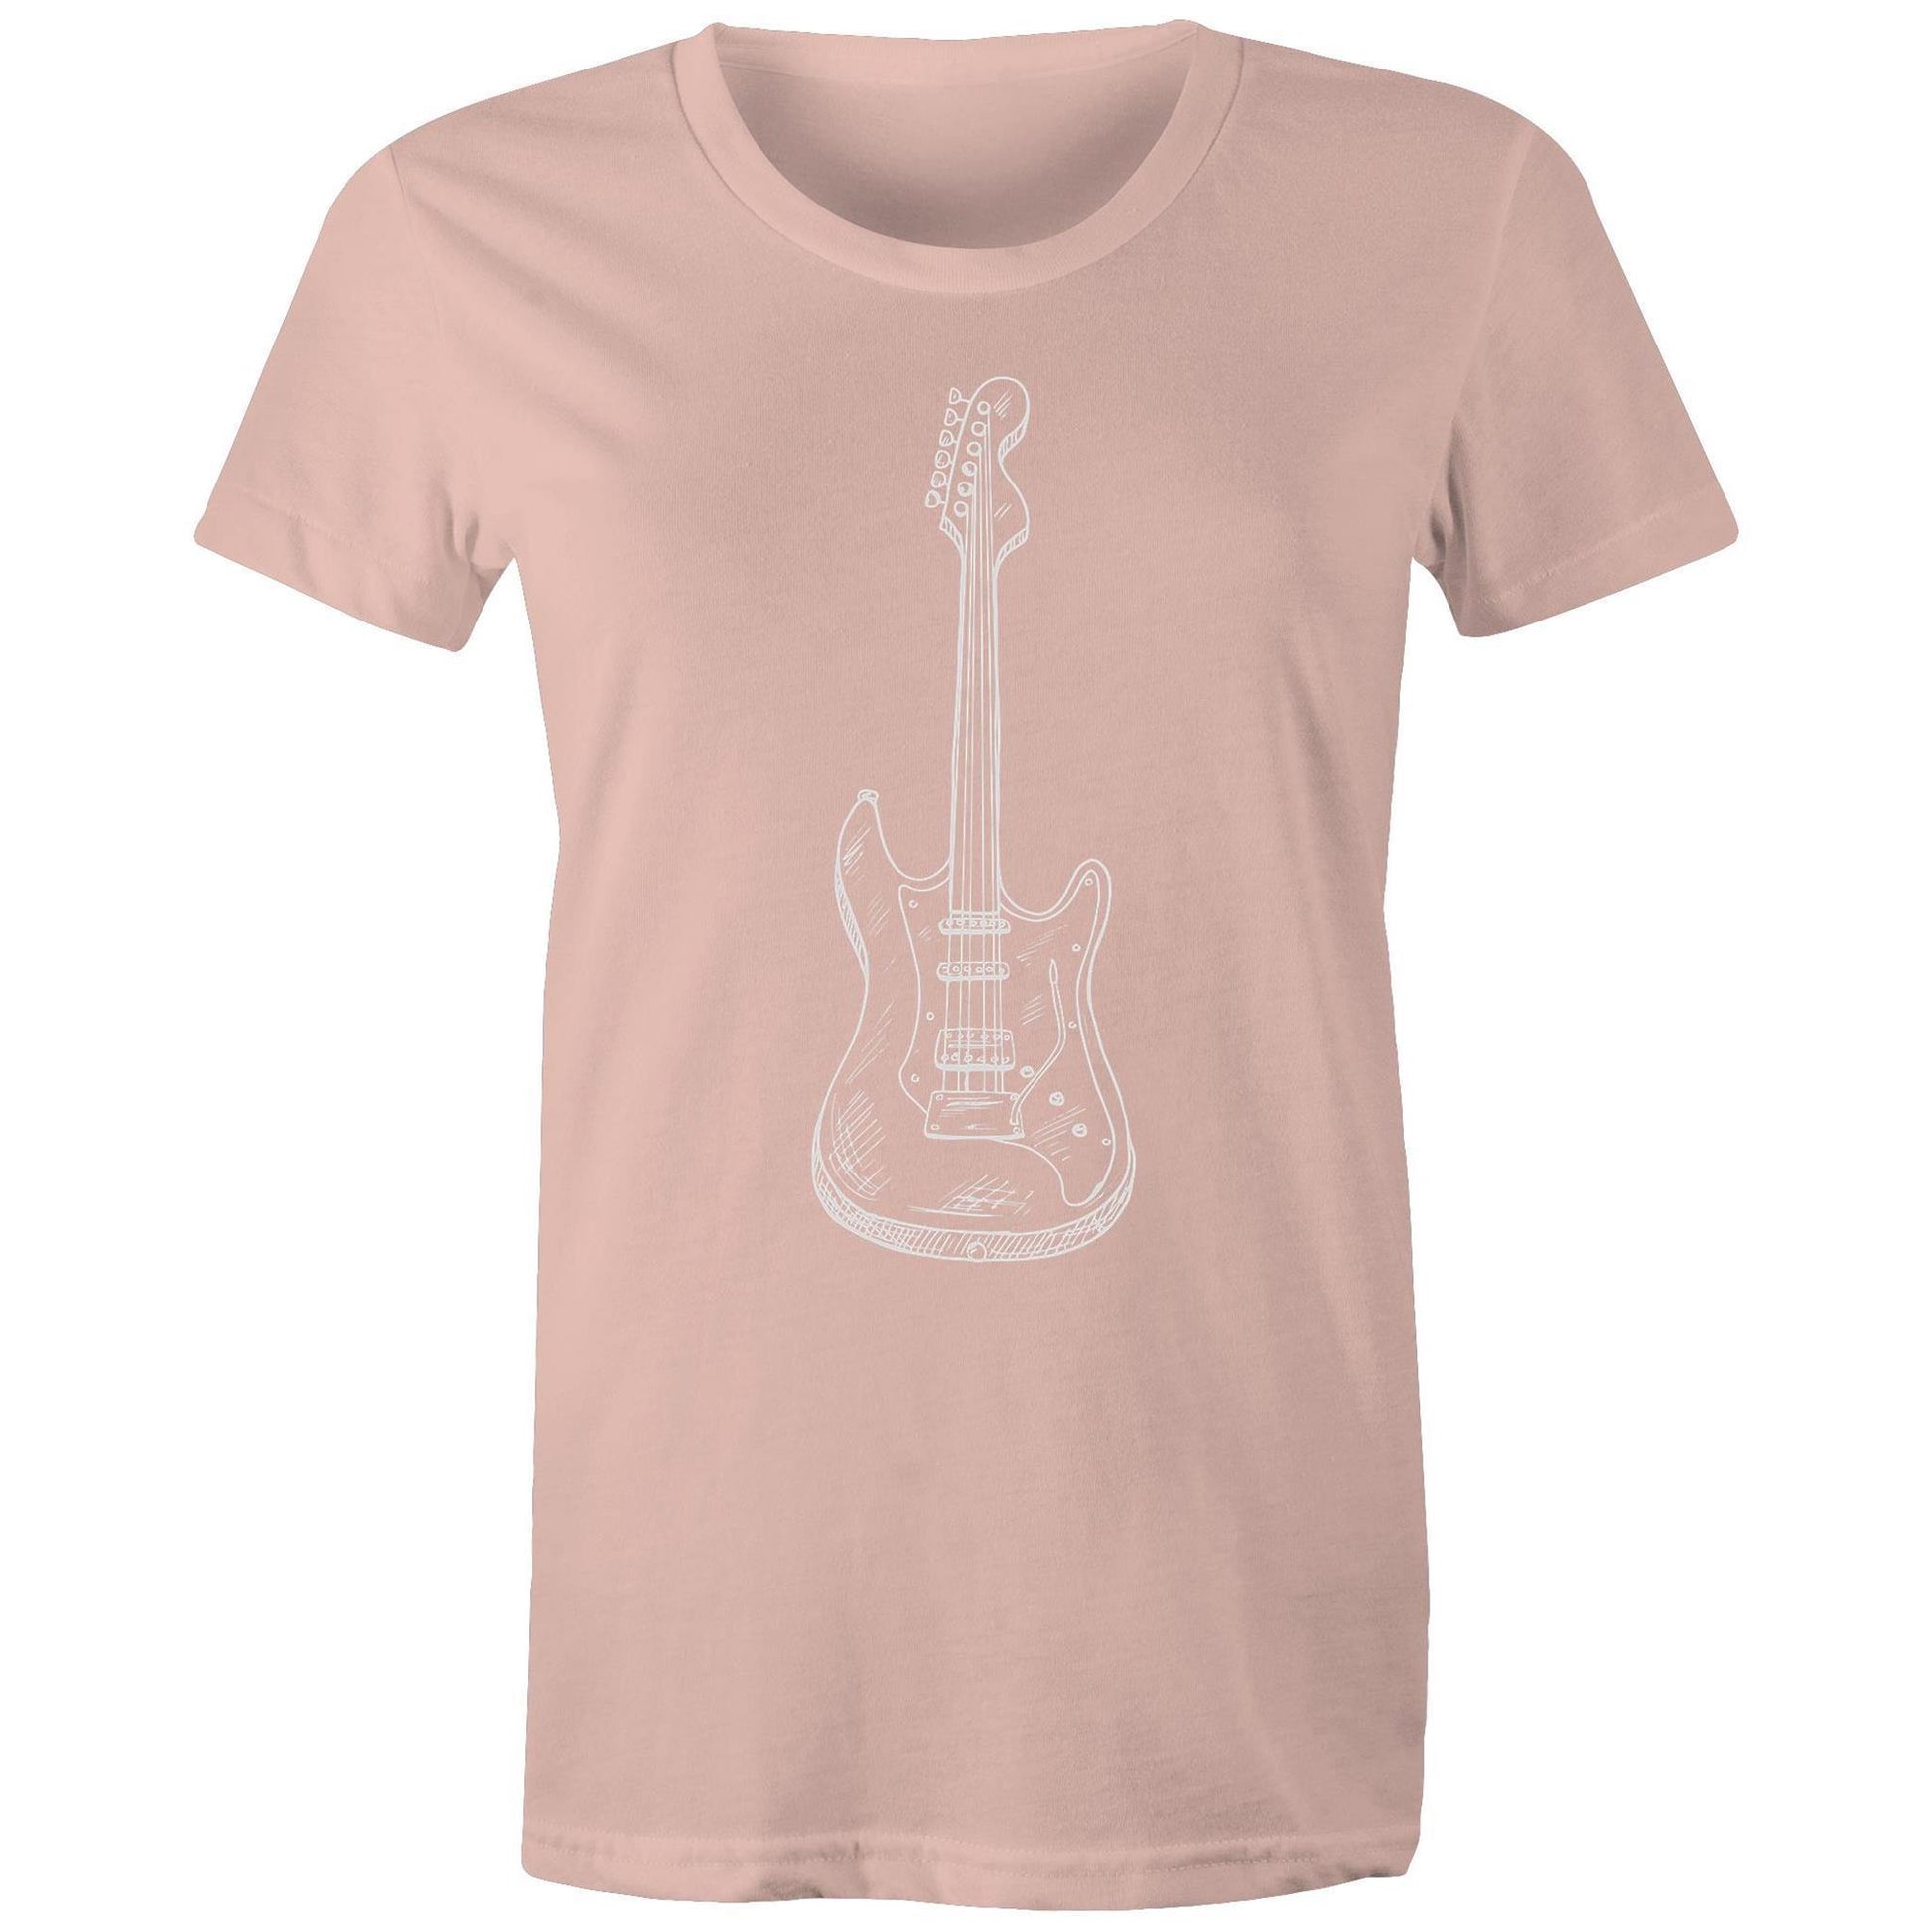 Guitar - Women's T-shirt Pale Pink Womens T-shirt Music Womens